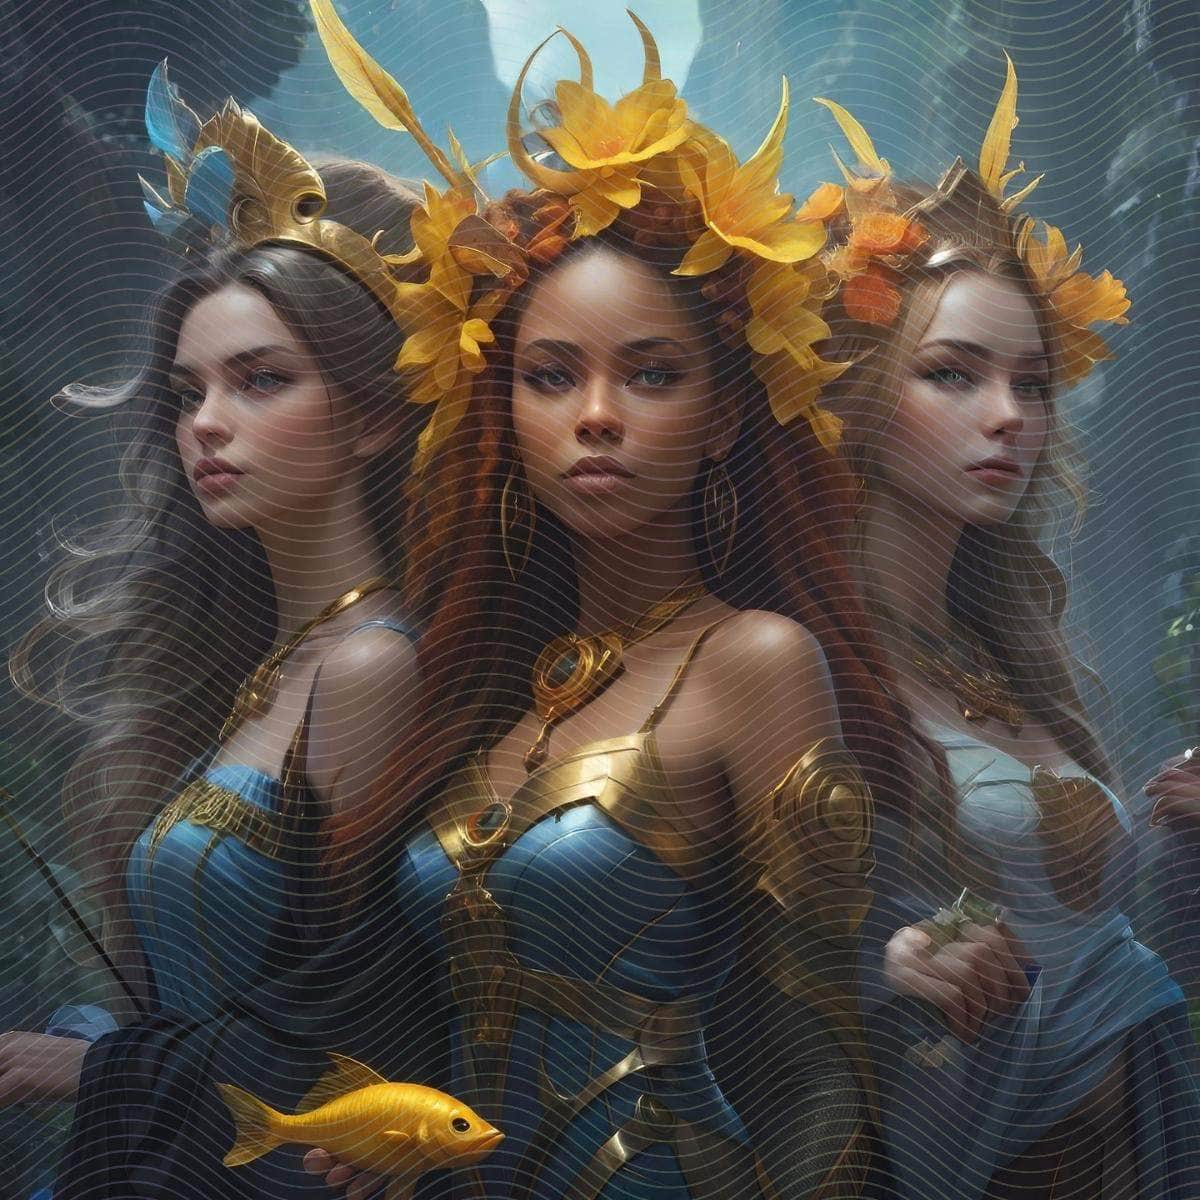 Fantasy Portrait Art Of Three Celestial Women